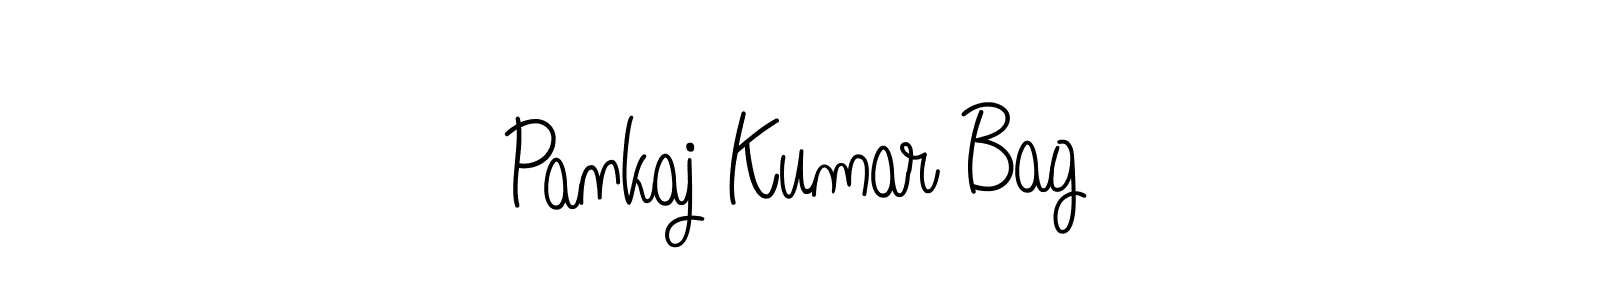 Make a beautiful signature design for name Pankaj Kumar Bag. Use this online signature maker to create a handwritten signature for free. Pankaj Kumar Bag signature style 5 images and pictures png